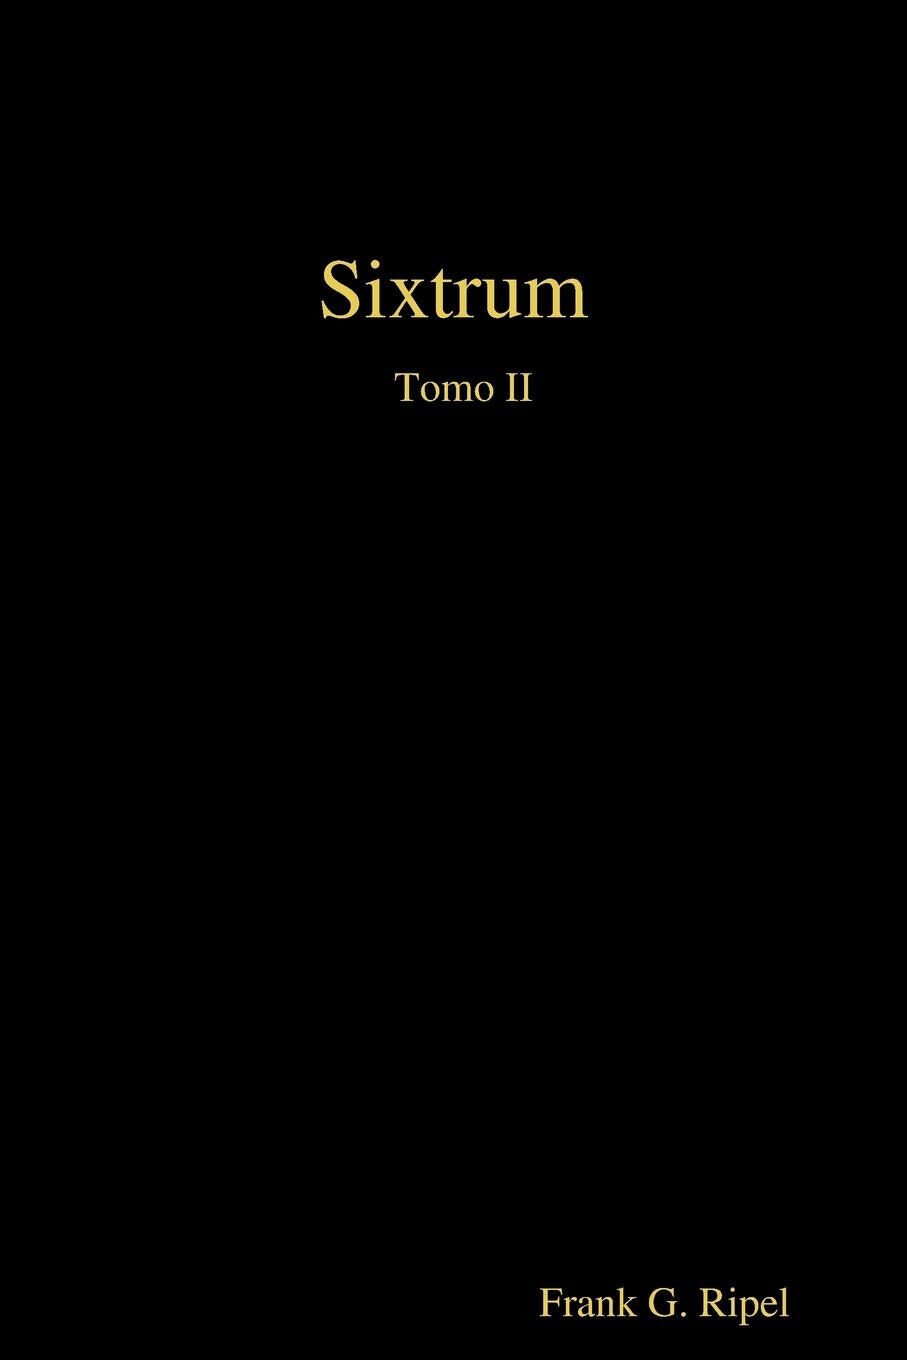 Sixtrum Tomo II - Frank G. Ripel - Lulu.com, 2020